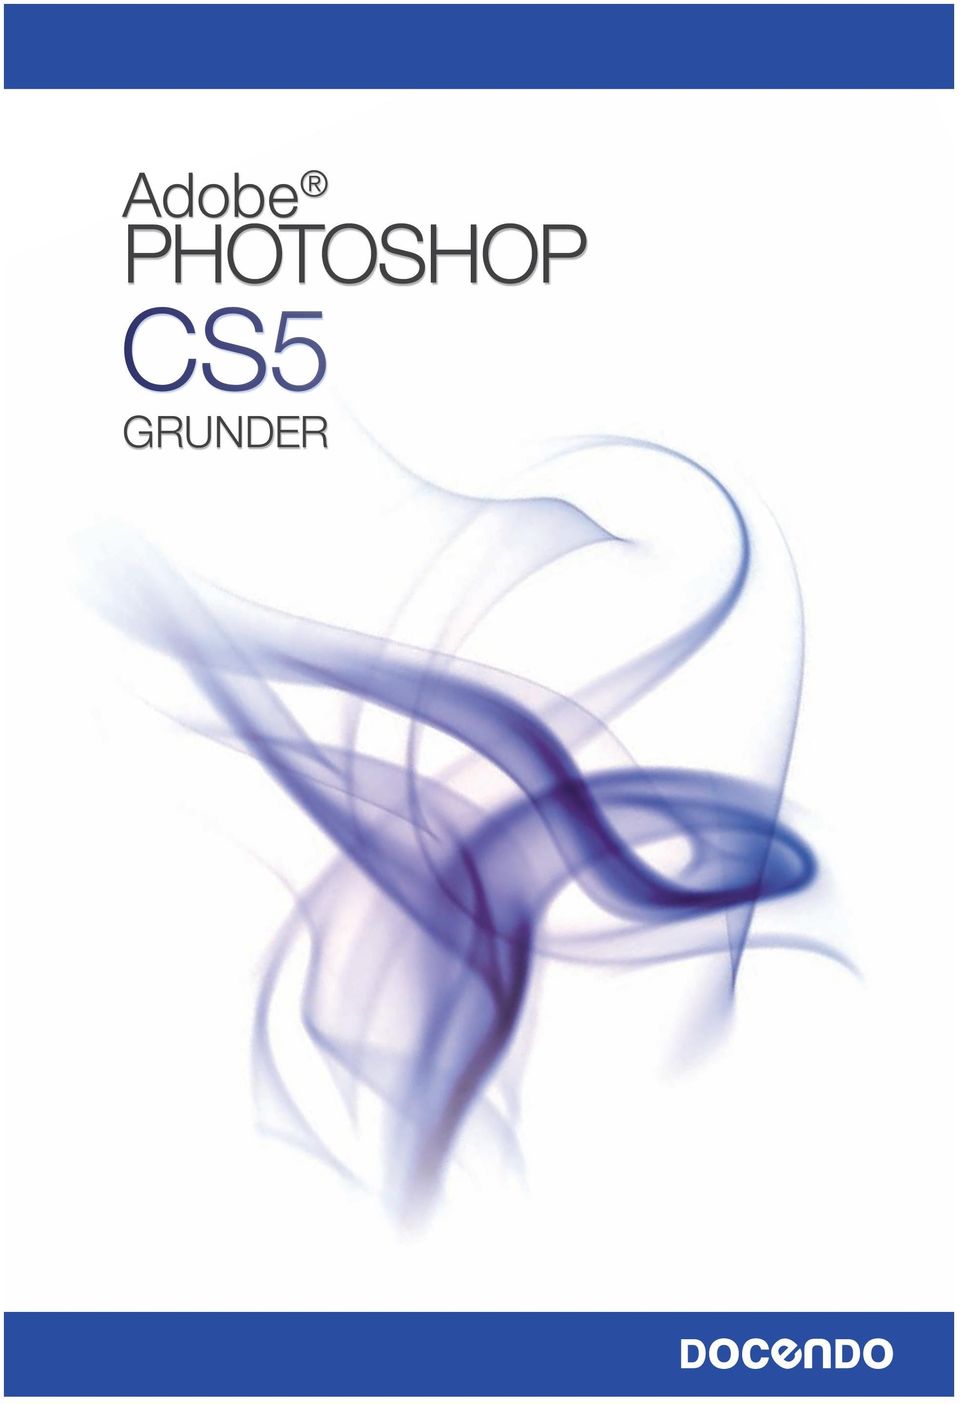 Adobe PHOTOSHOP CS5 GRUNDER - PDF Free Download